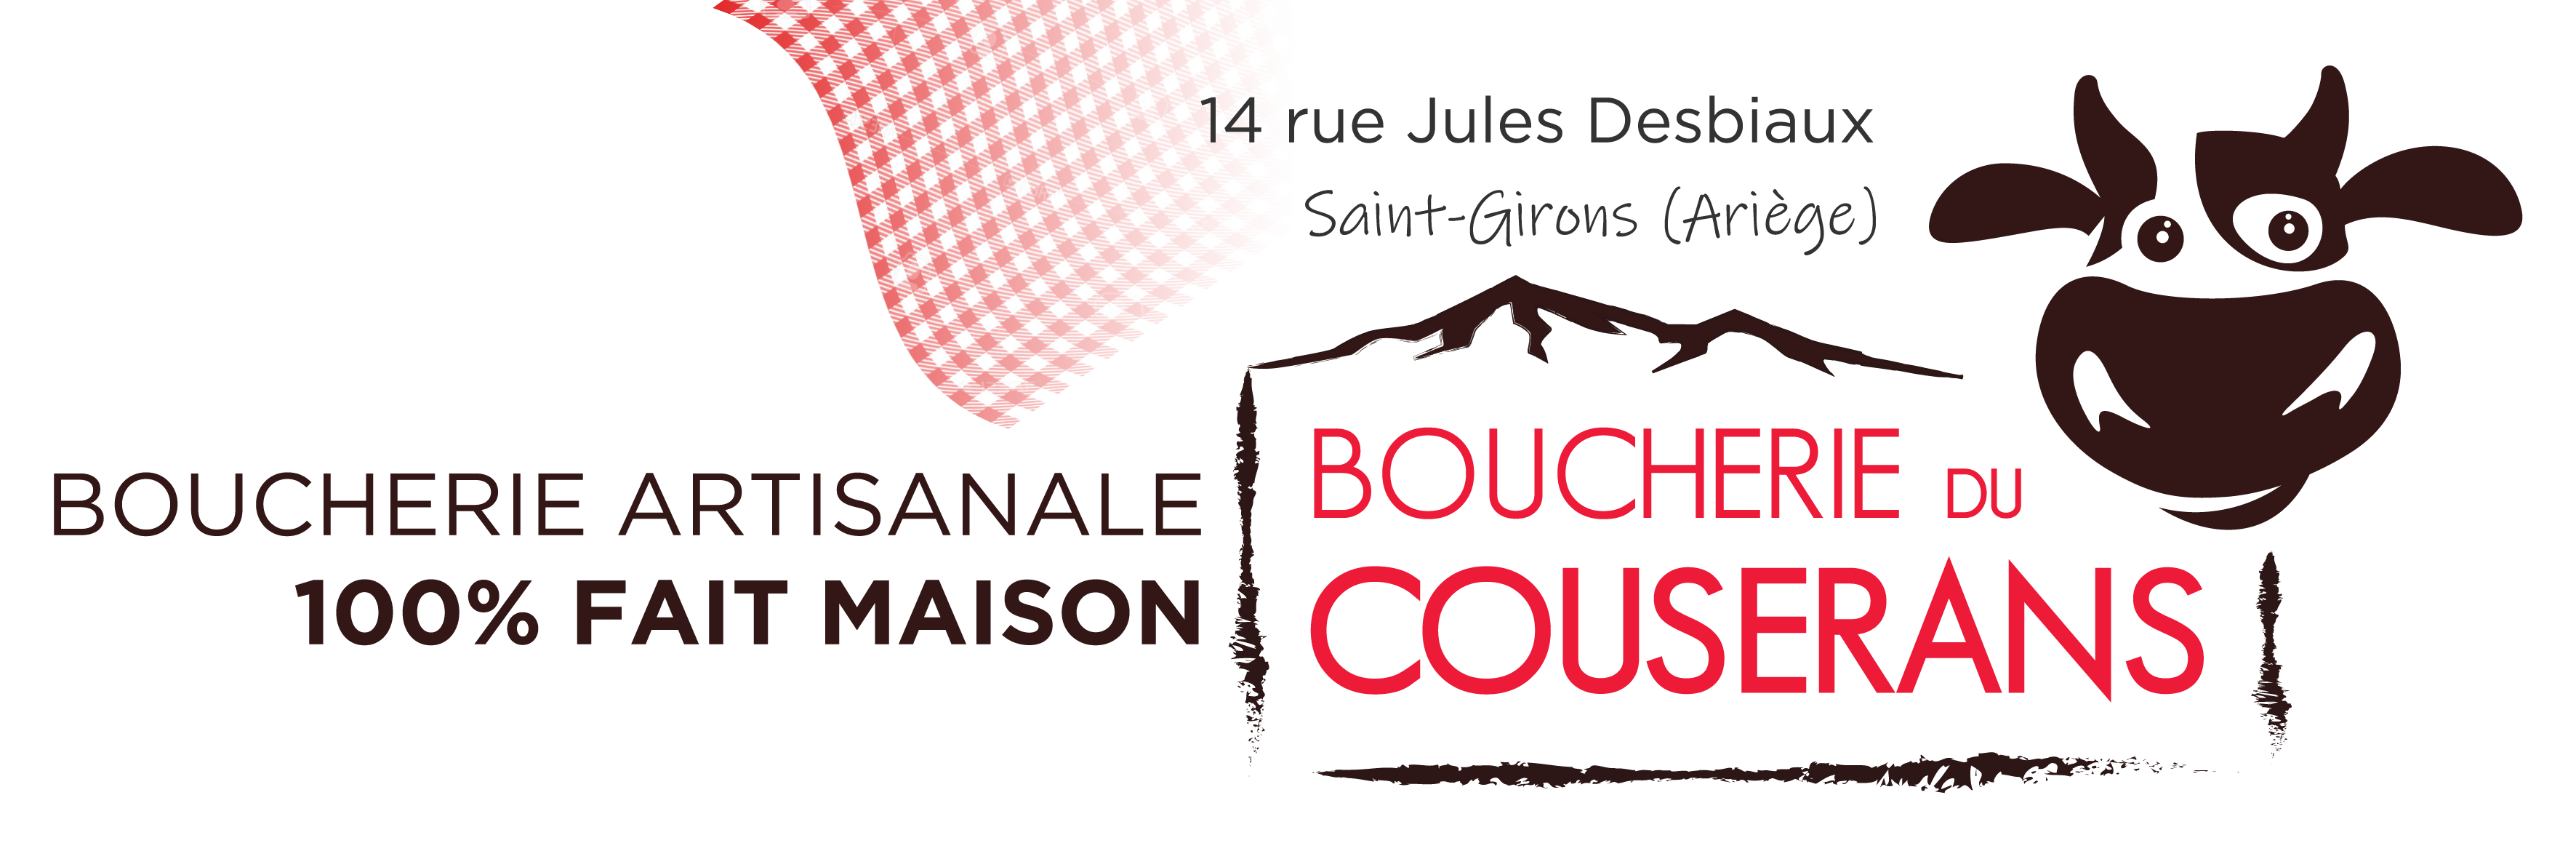 Boucherie Du Couserans